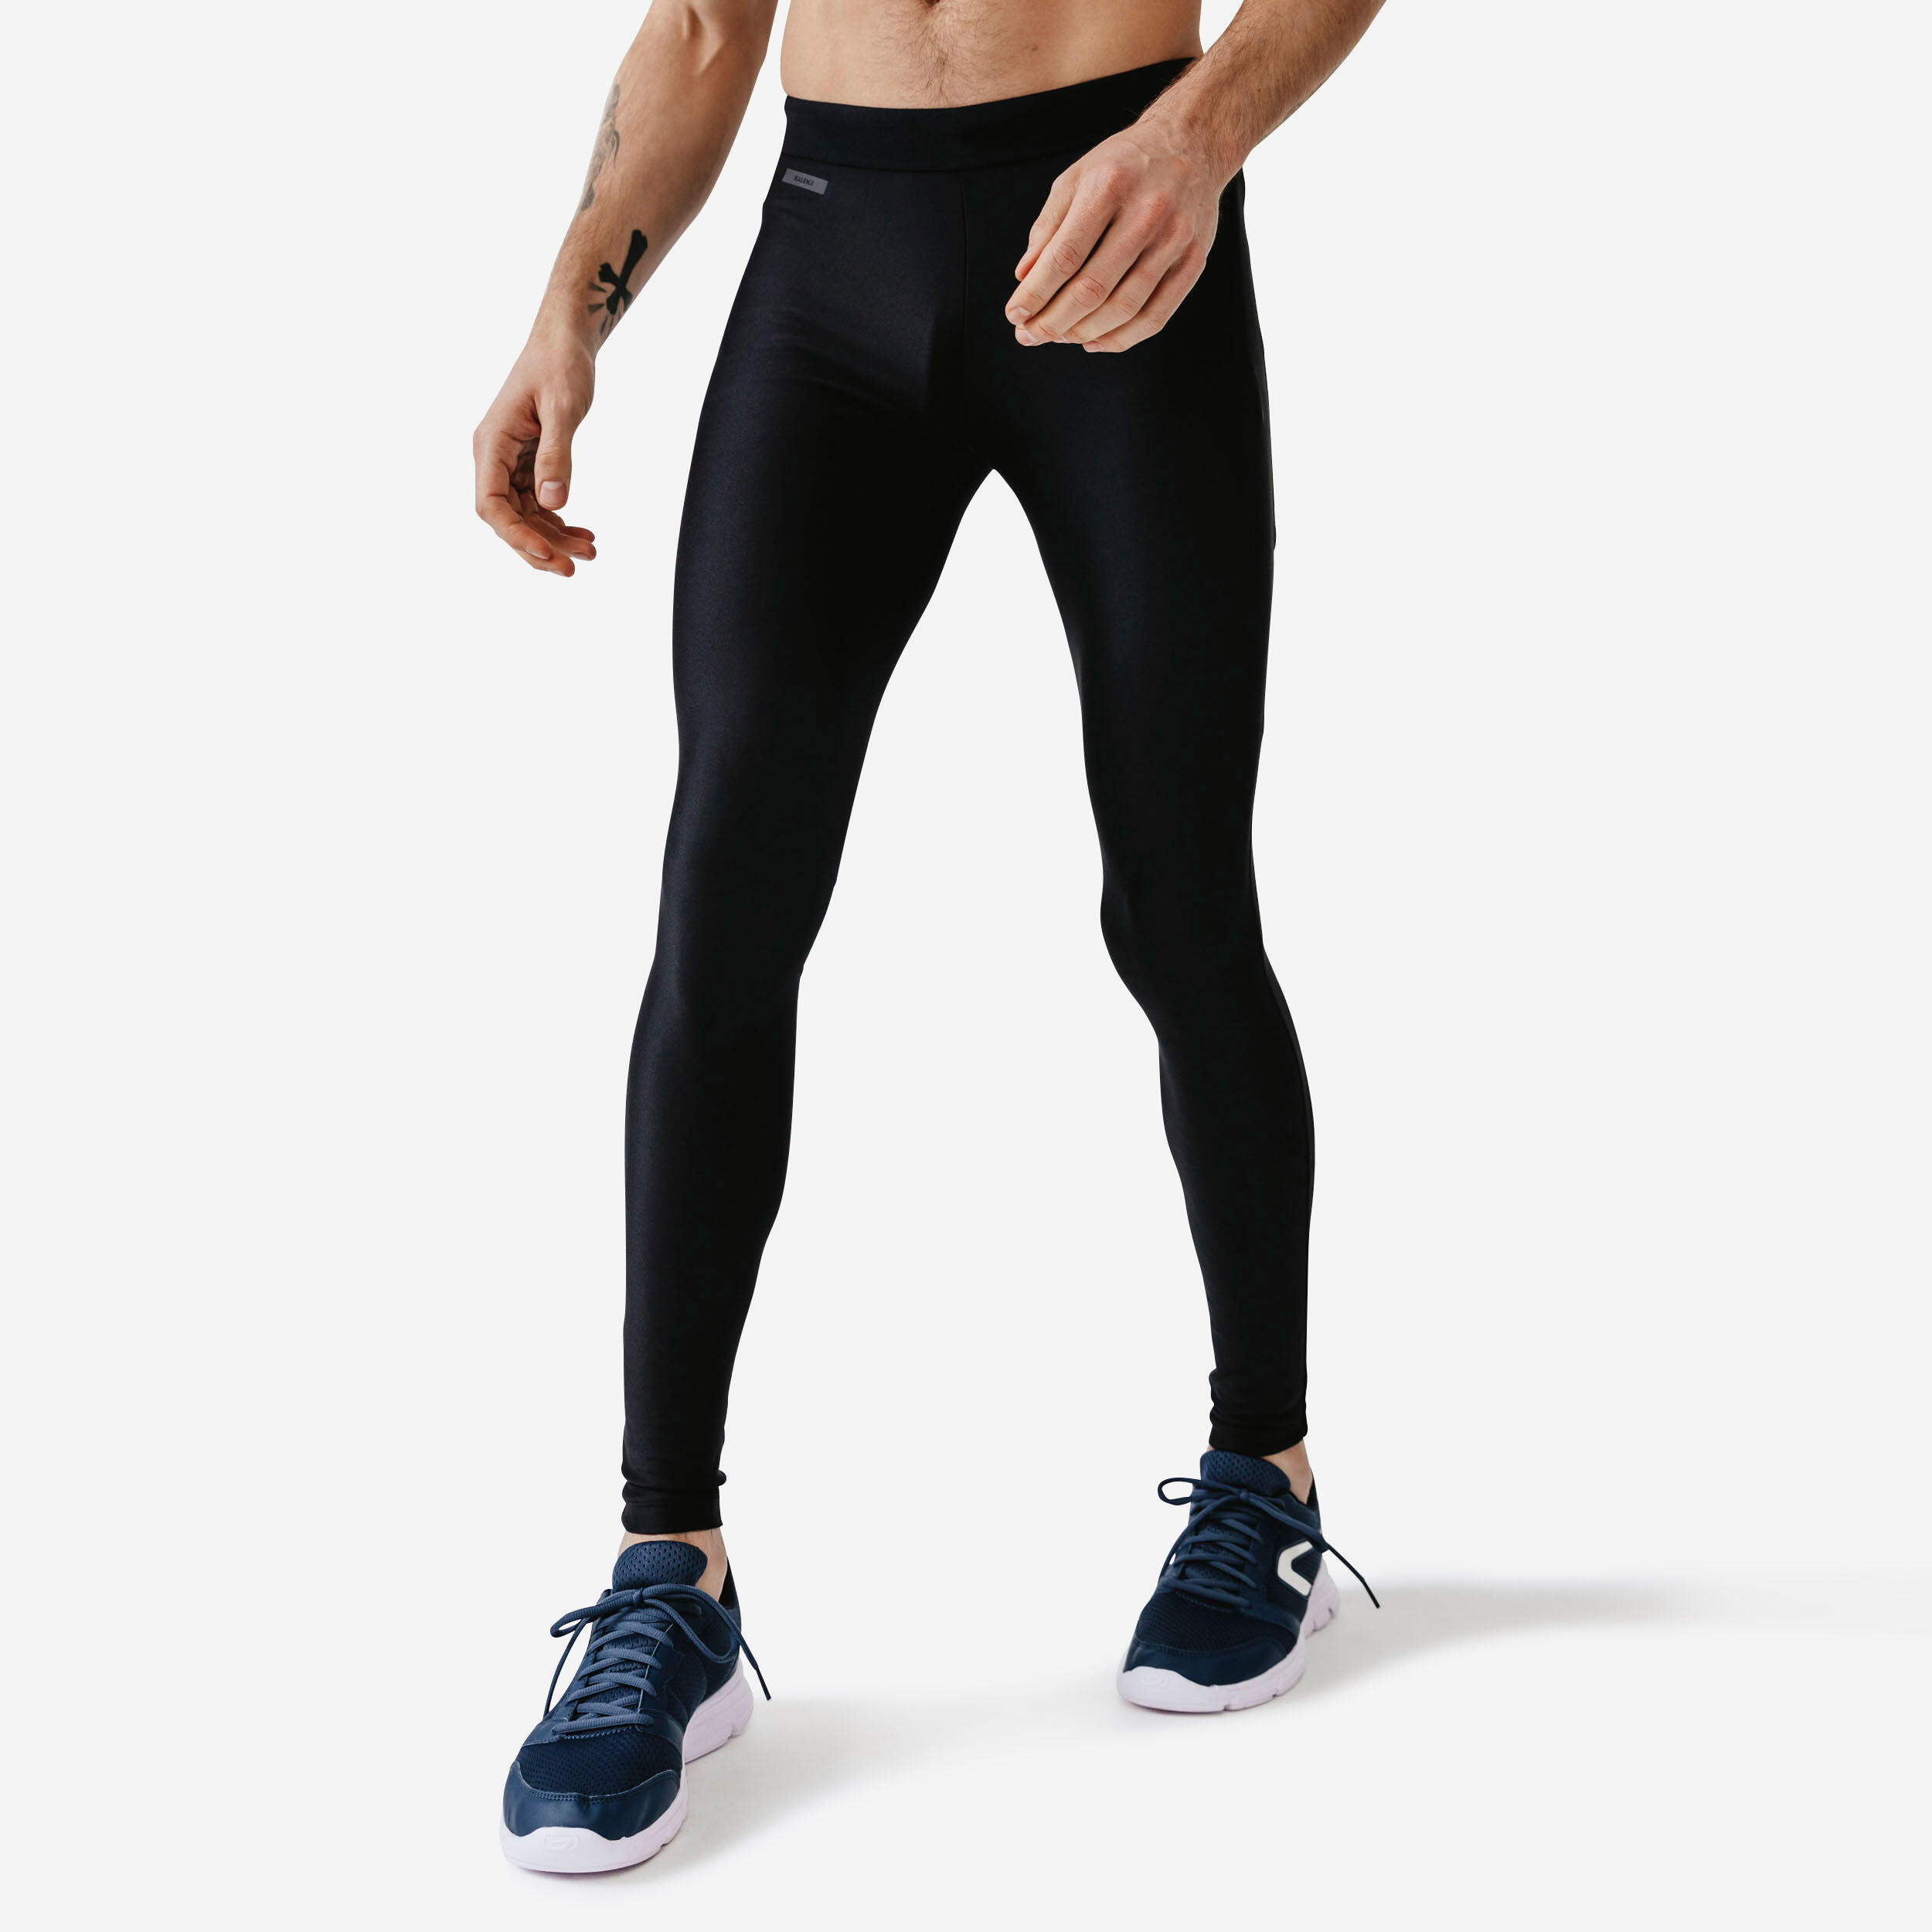 Men's Basic Running Tights - Black